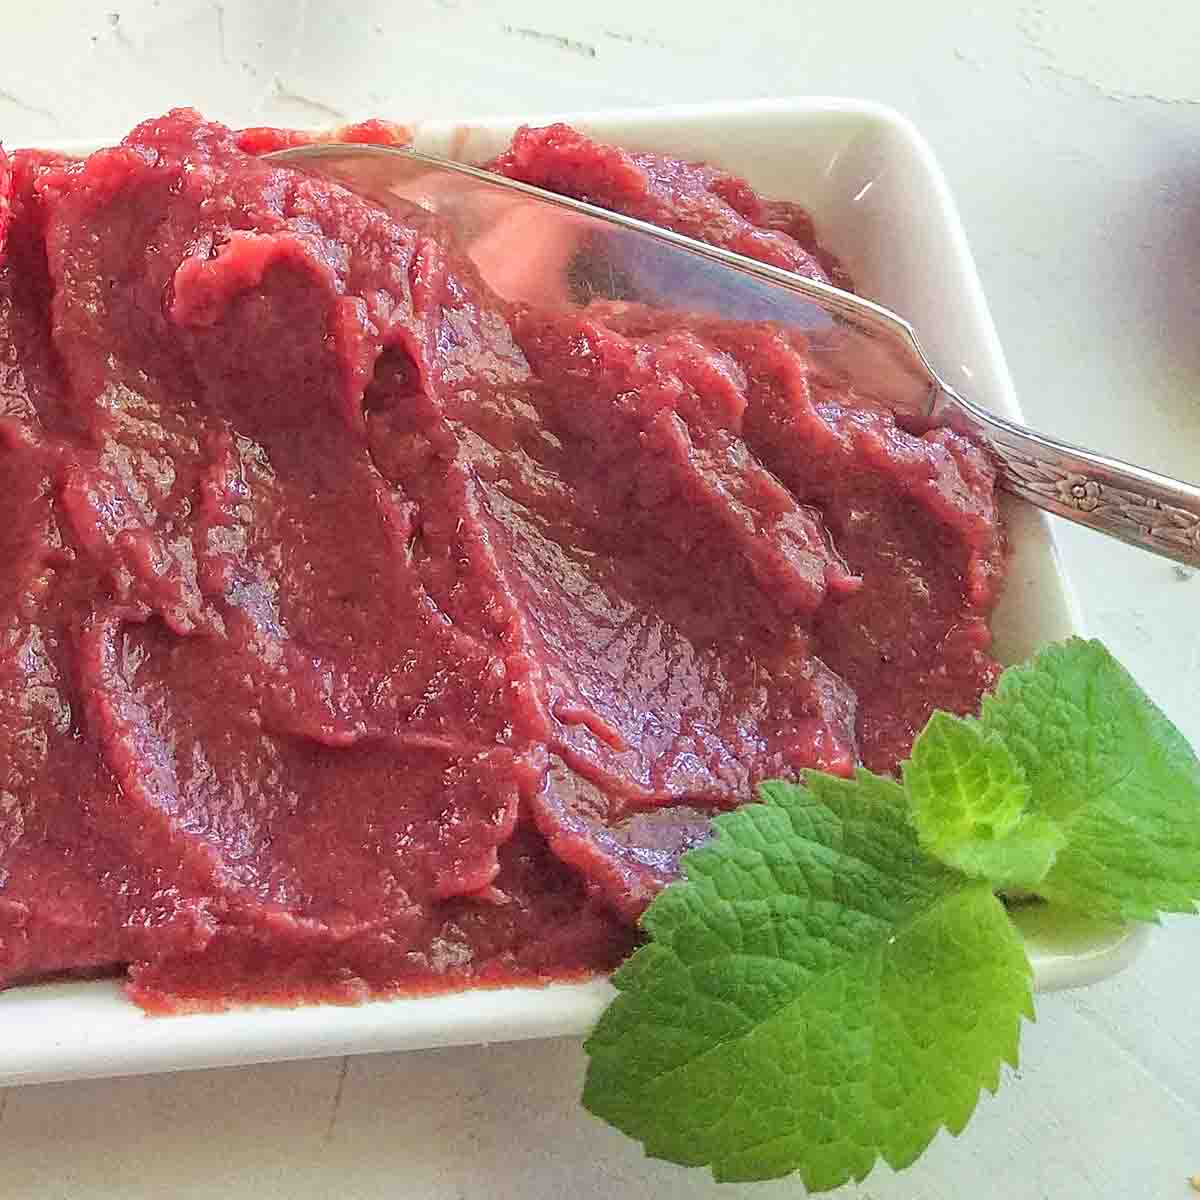 strawberry fruit spread recipe in a bowl